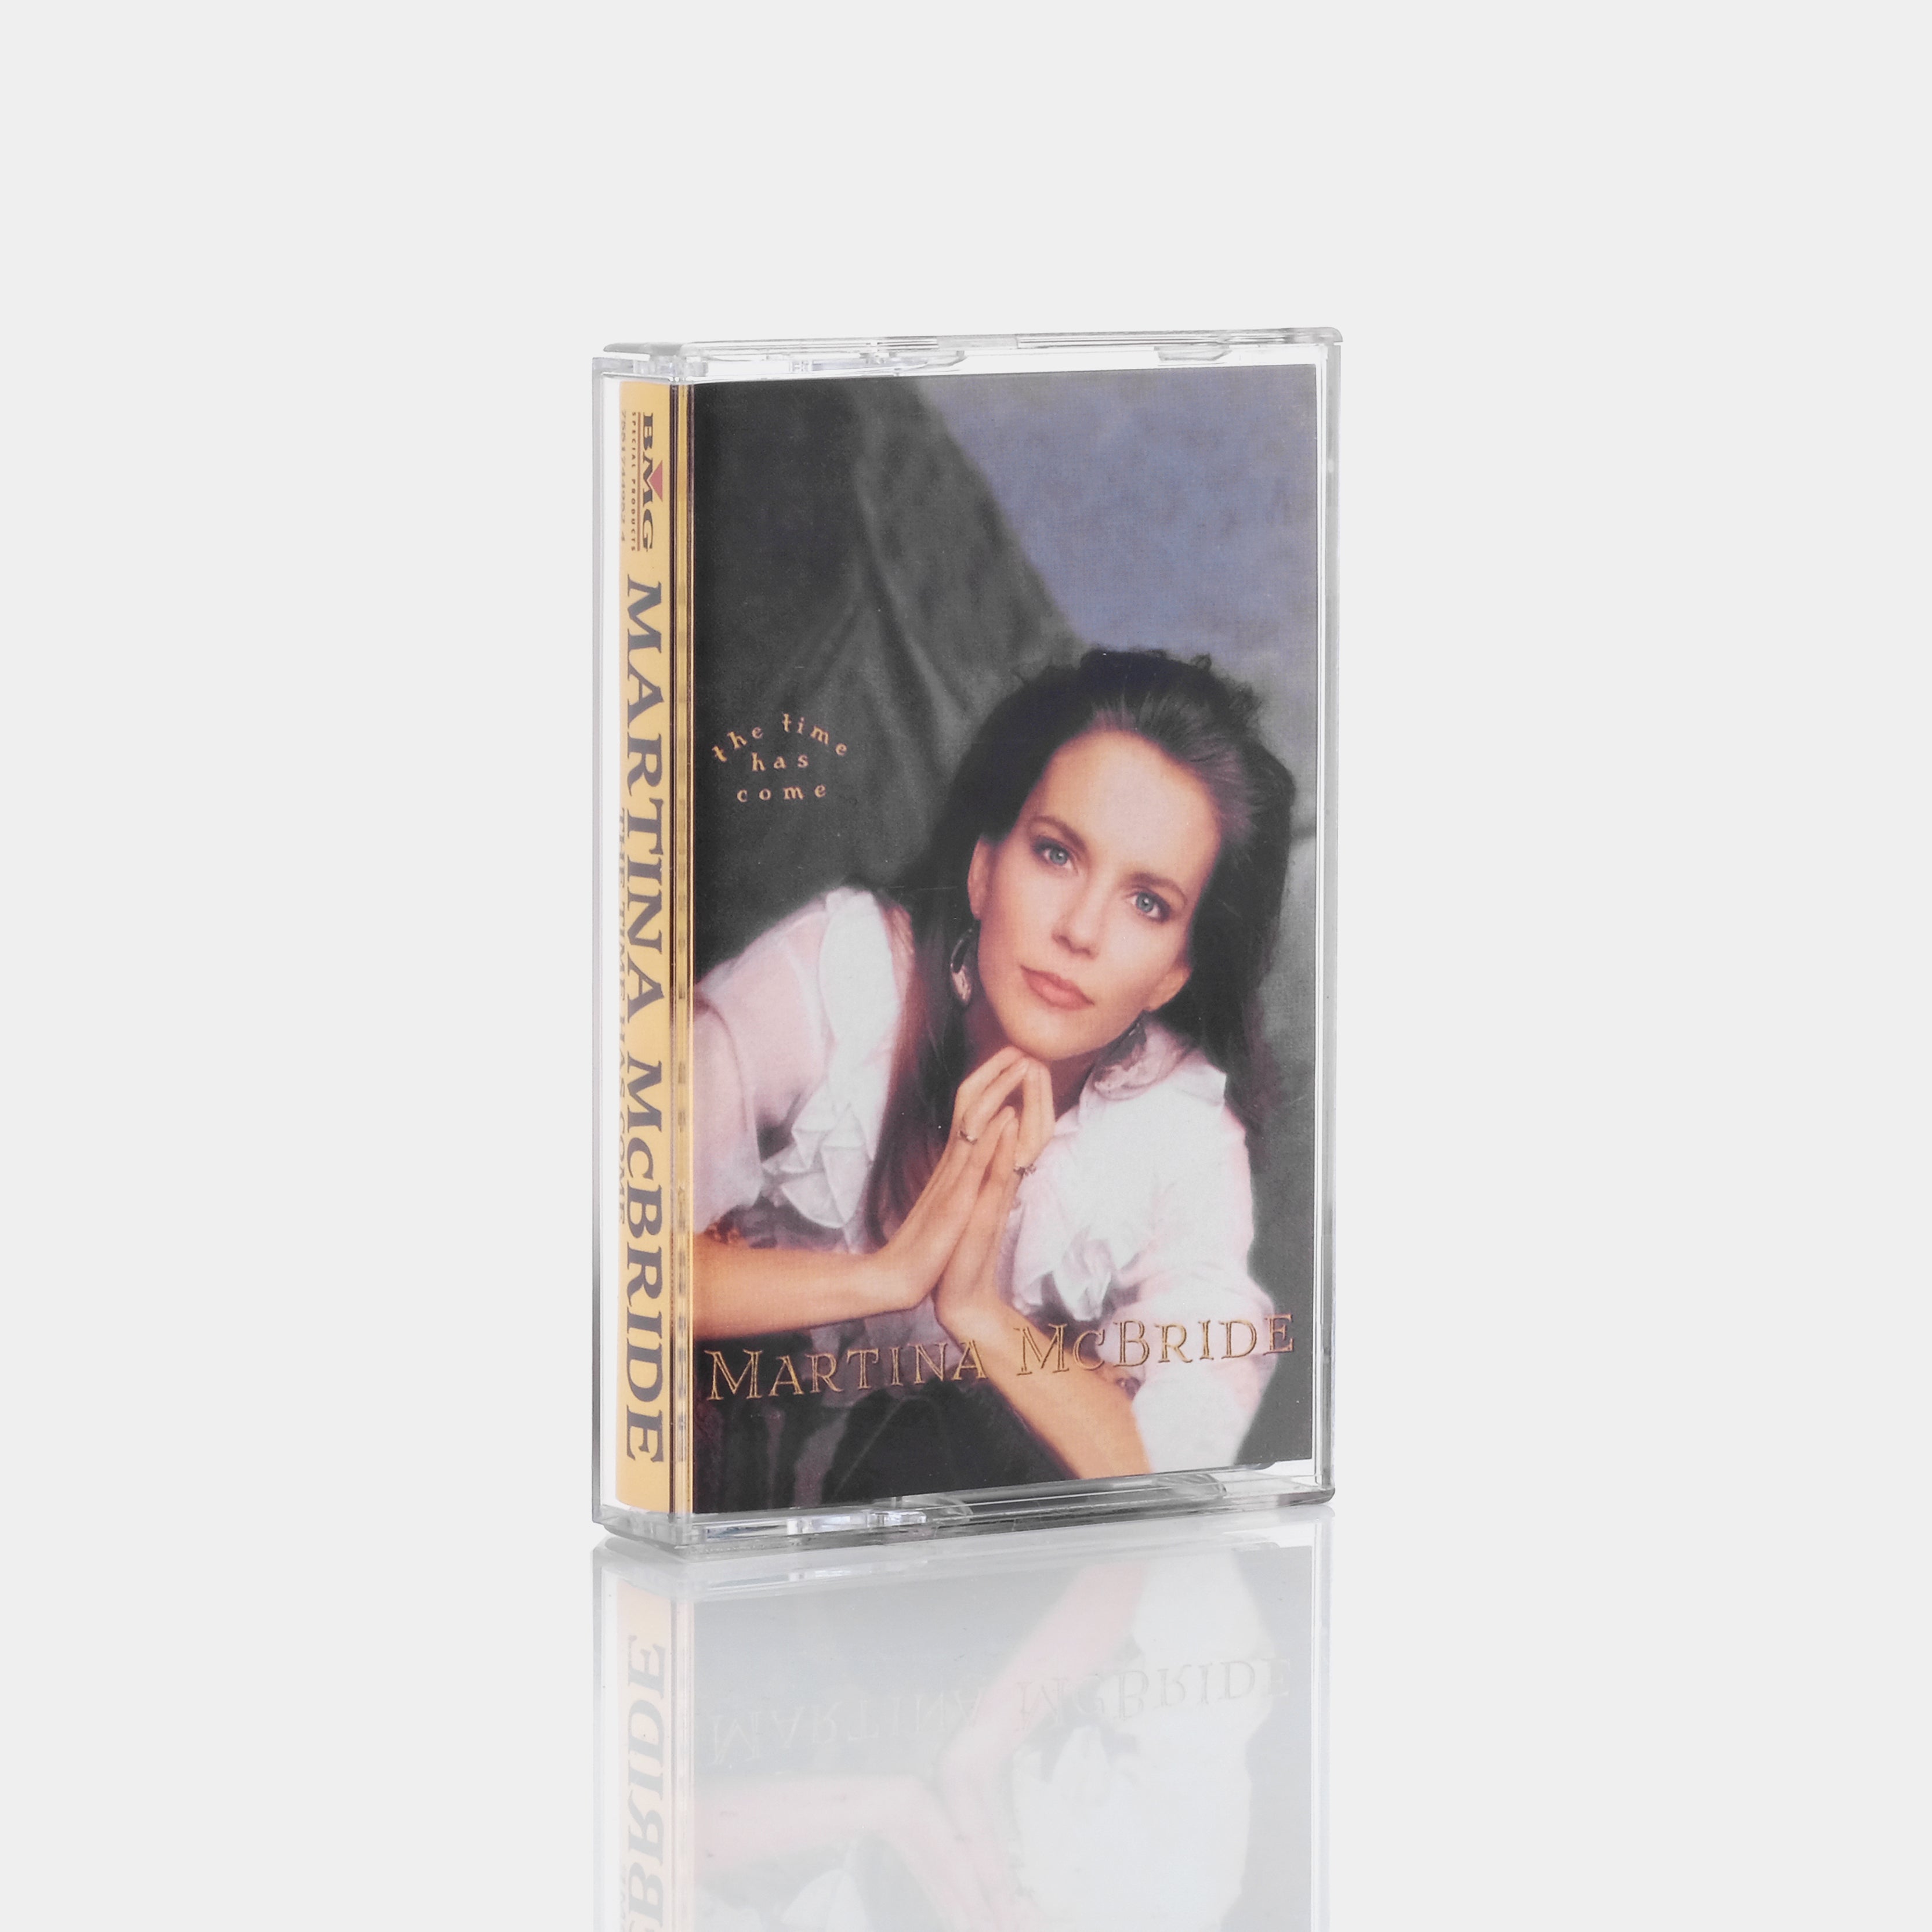 Martina McBride - The Time Has Come Cassette Tape